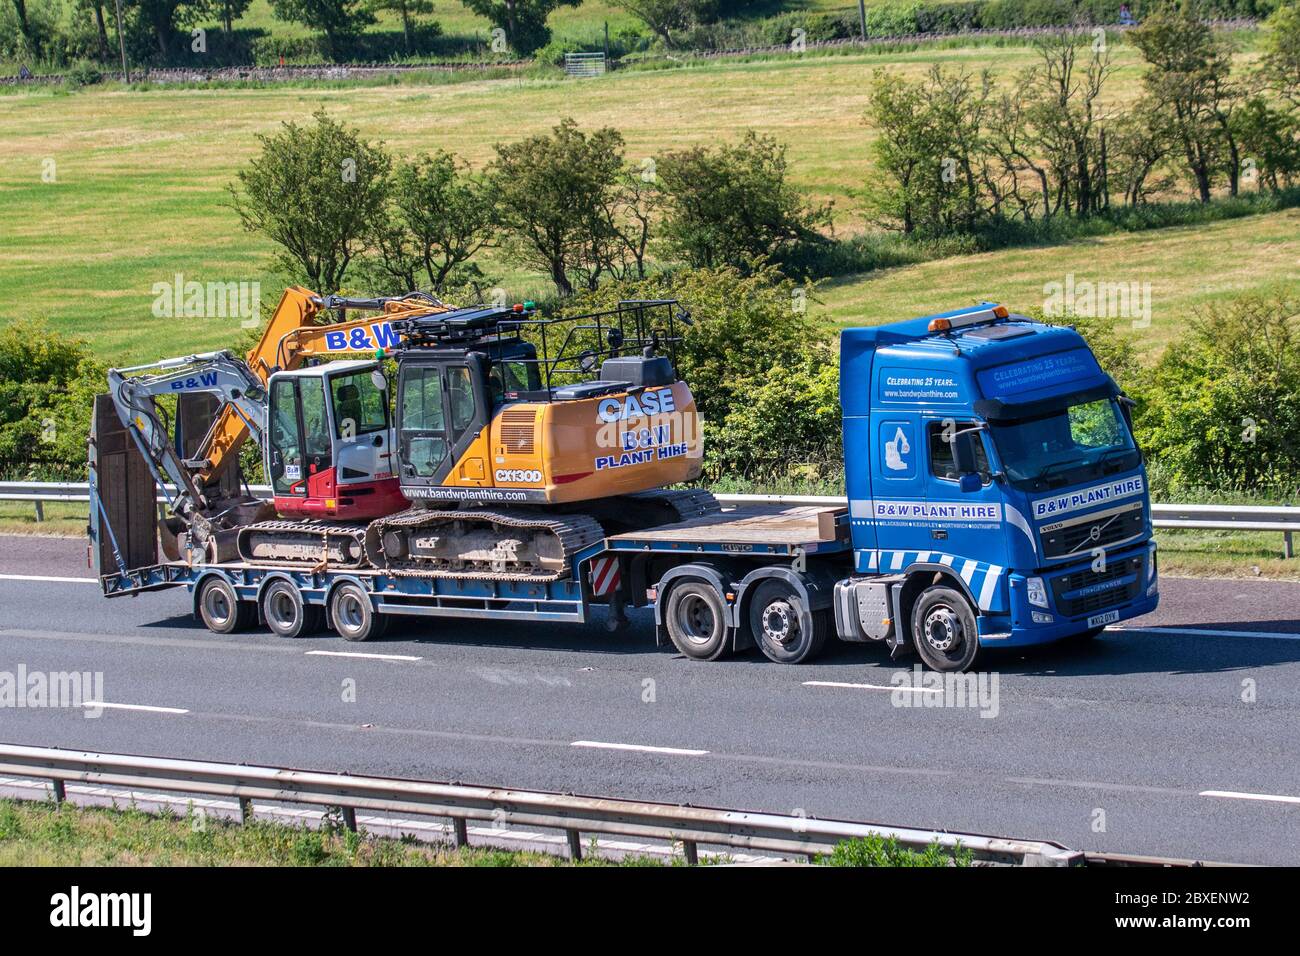 Truckers Of Europe 3 🚛